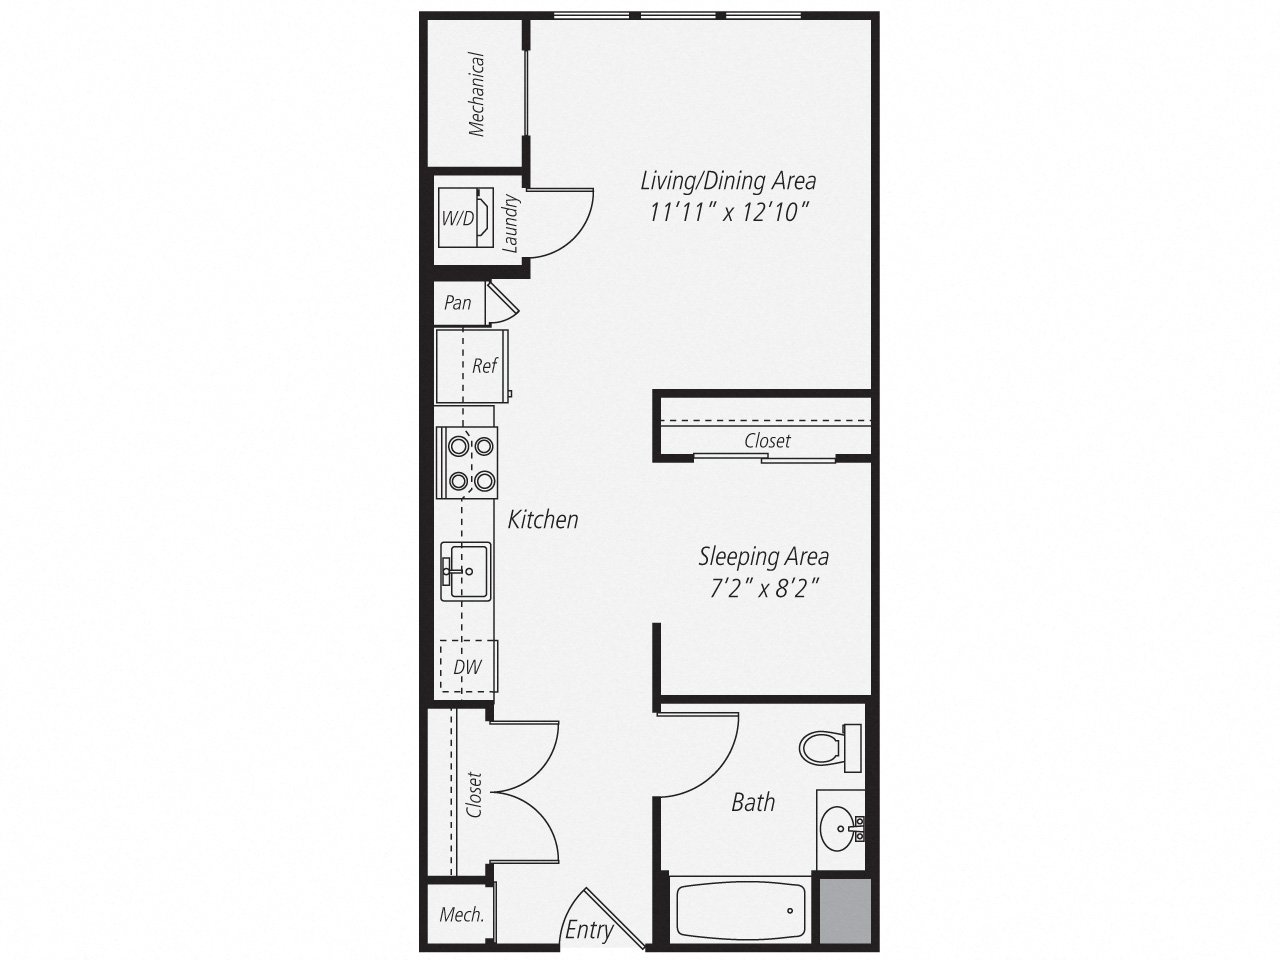 Floorplan for Apartment #332, 0 bedroom unit at Halstead Norwalk